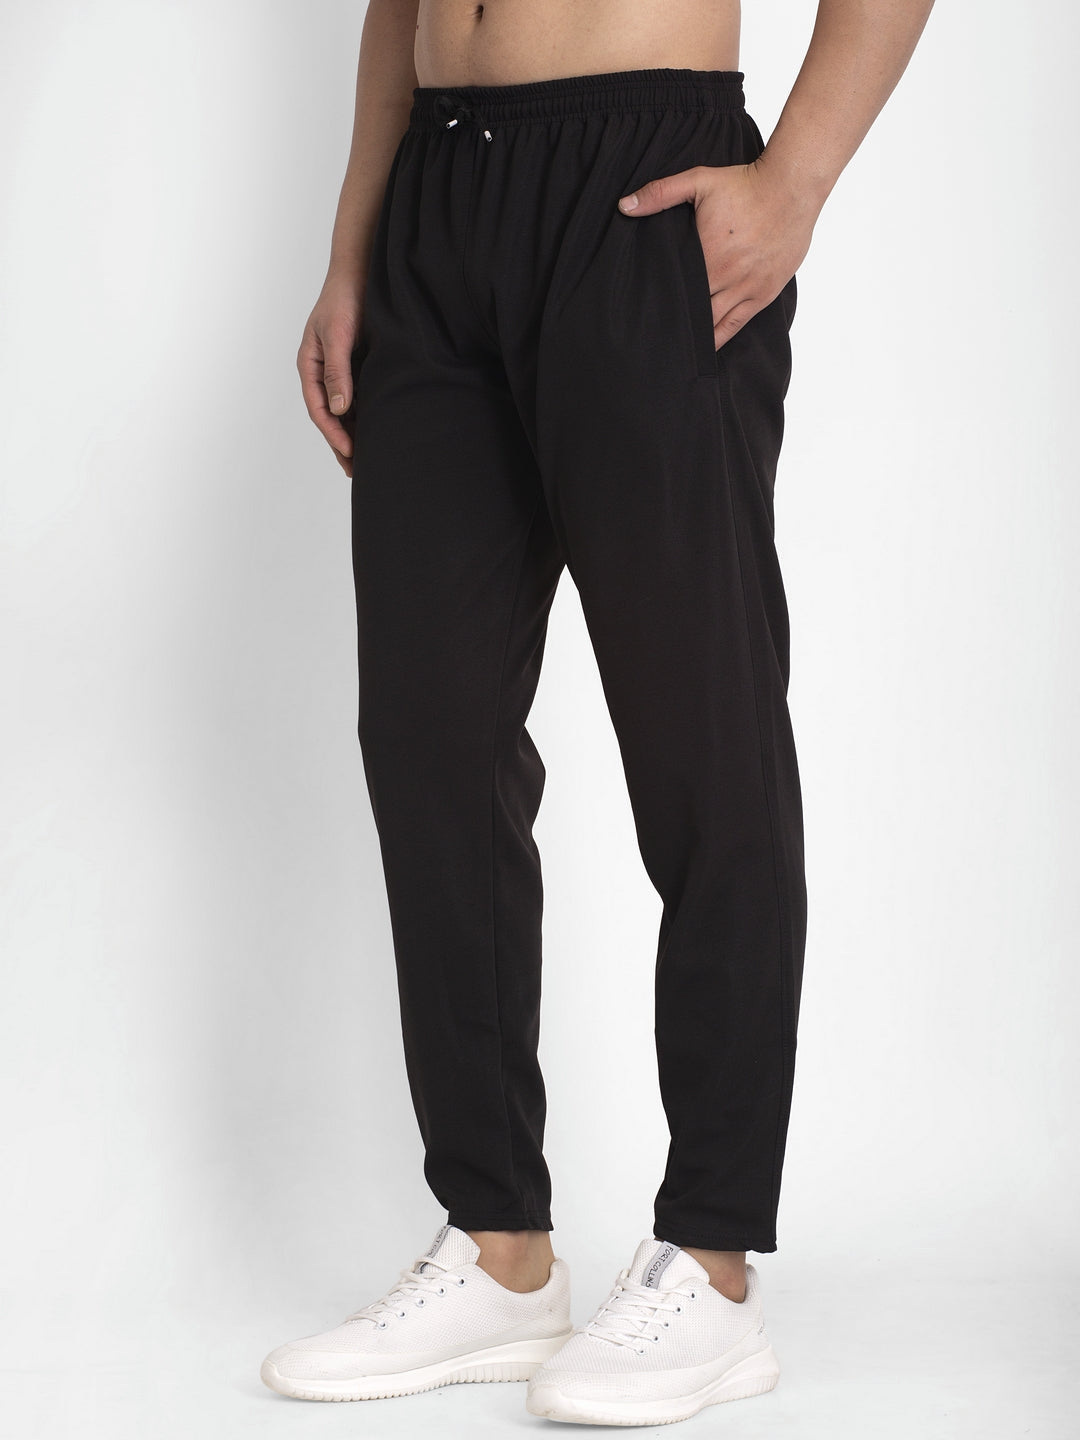 Men's Black Solid Track Pants ( JOG 014Black ) - Jainish